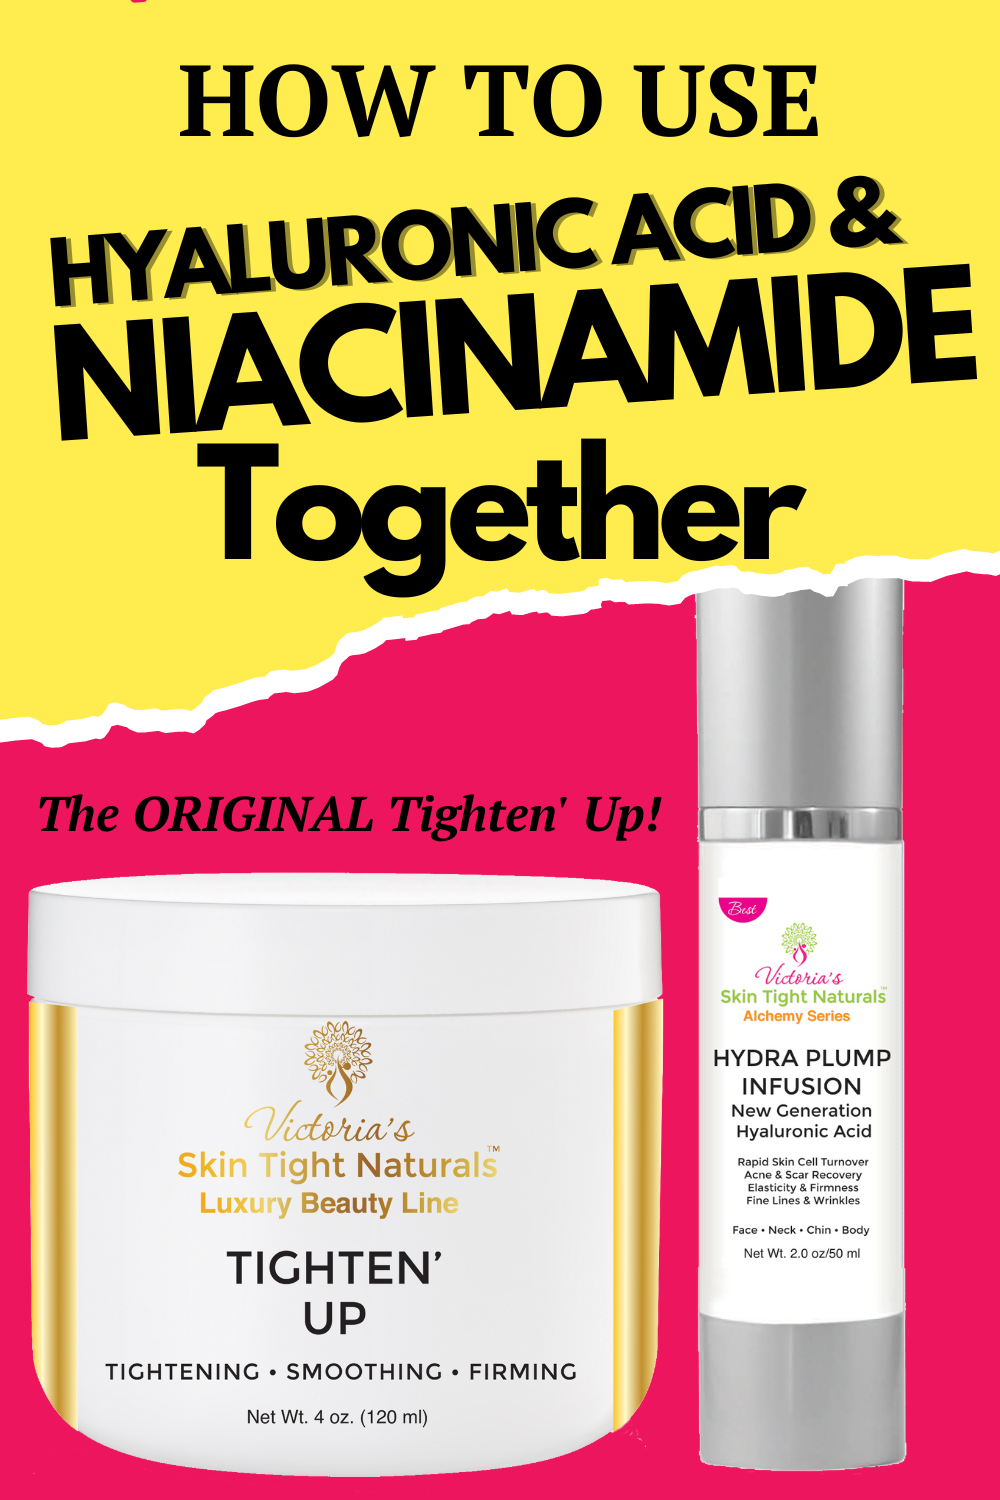 How Niacinamide Improves Crepe Skin